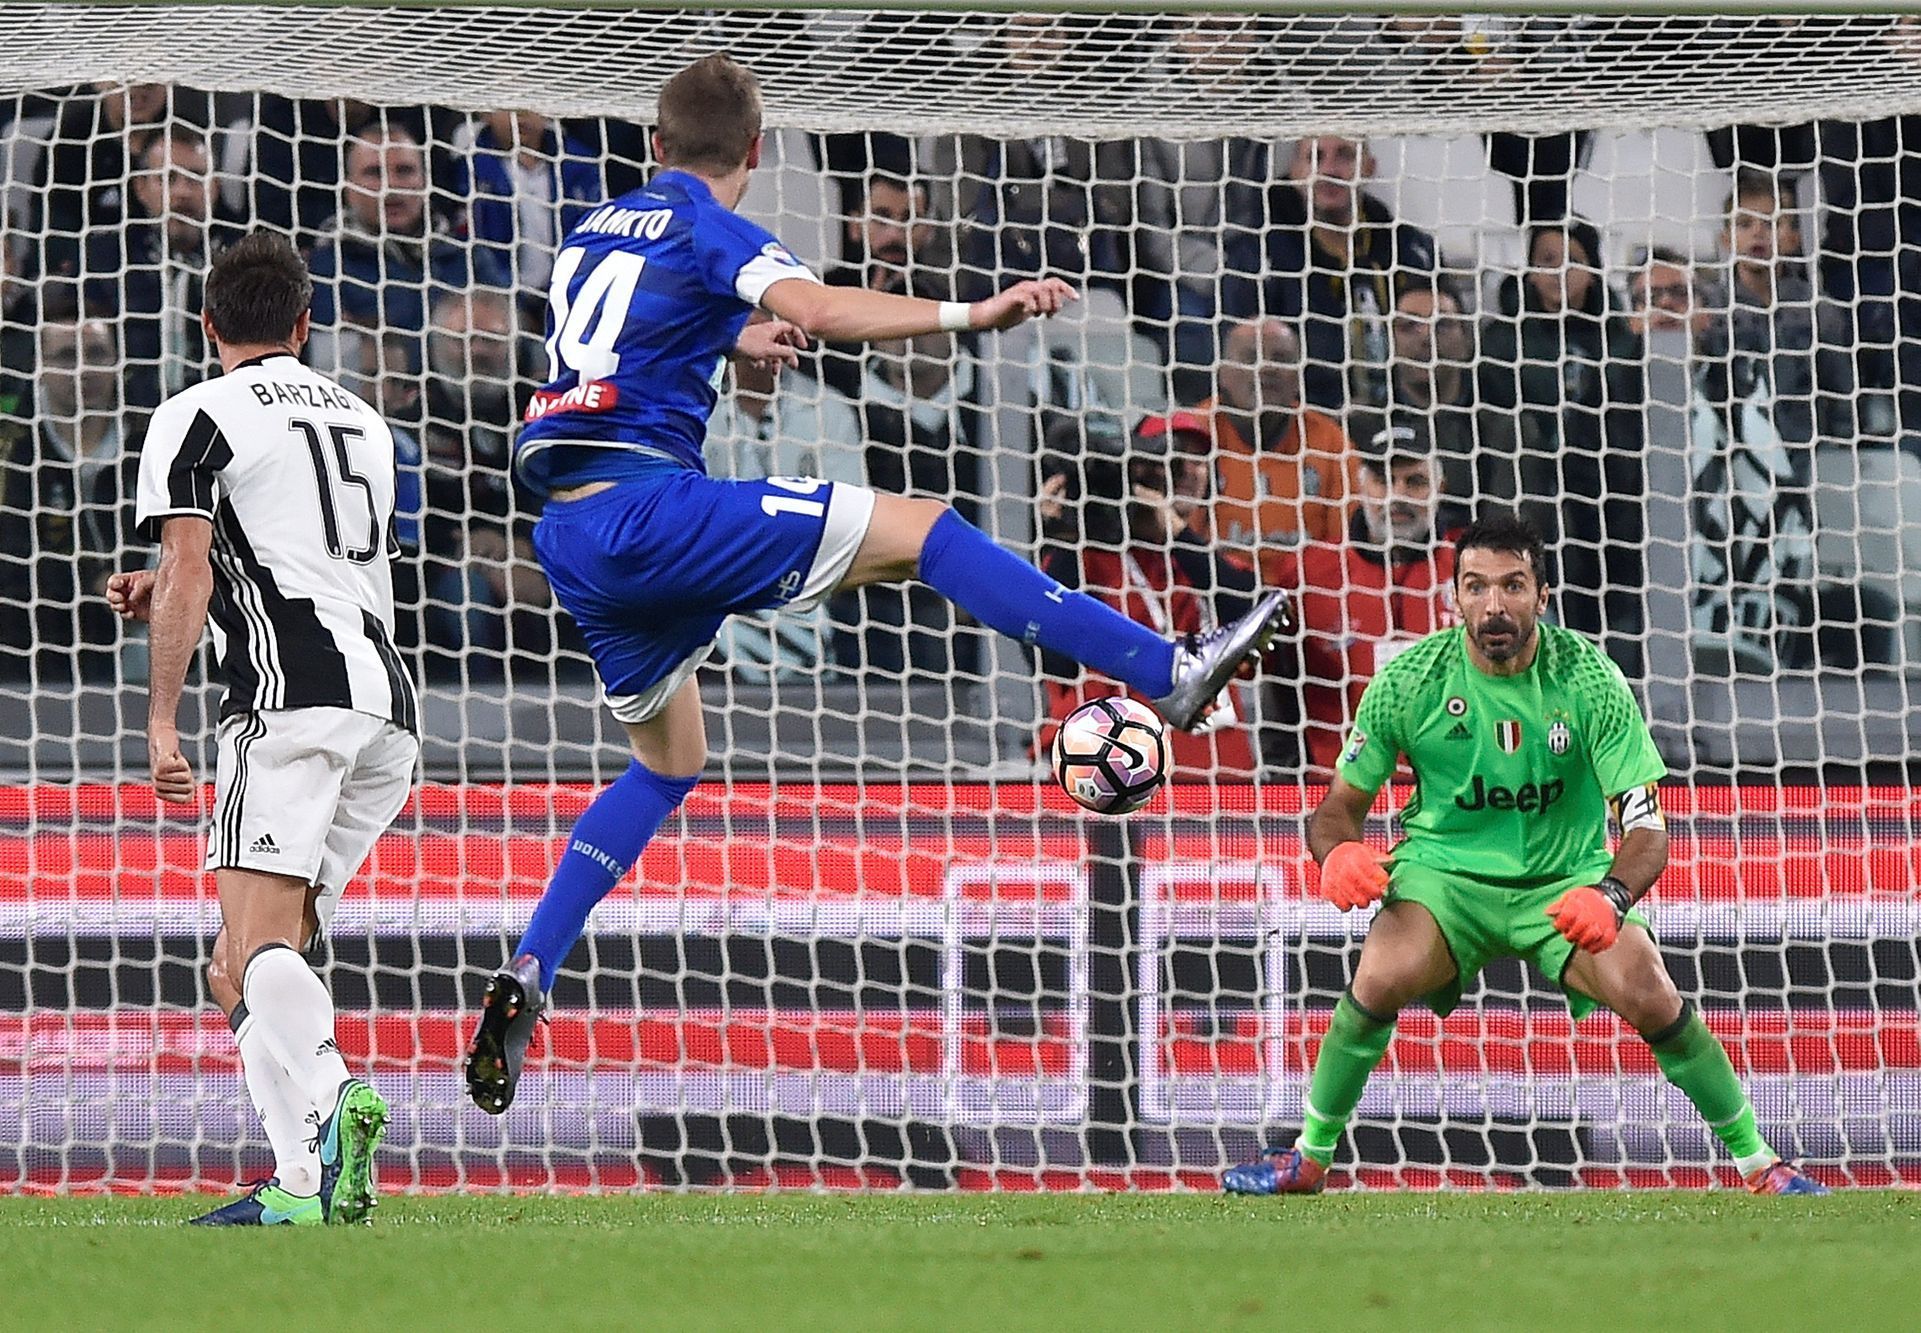 Juventus - Udine, Serie A 2016/17